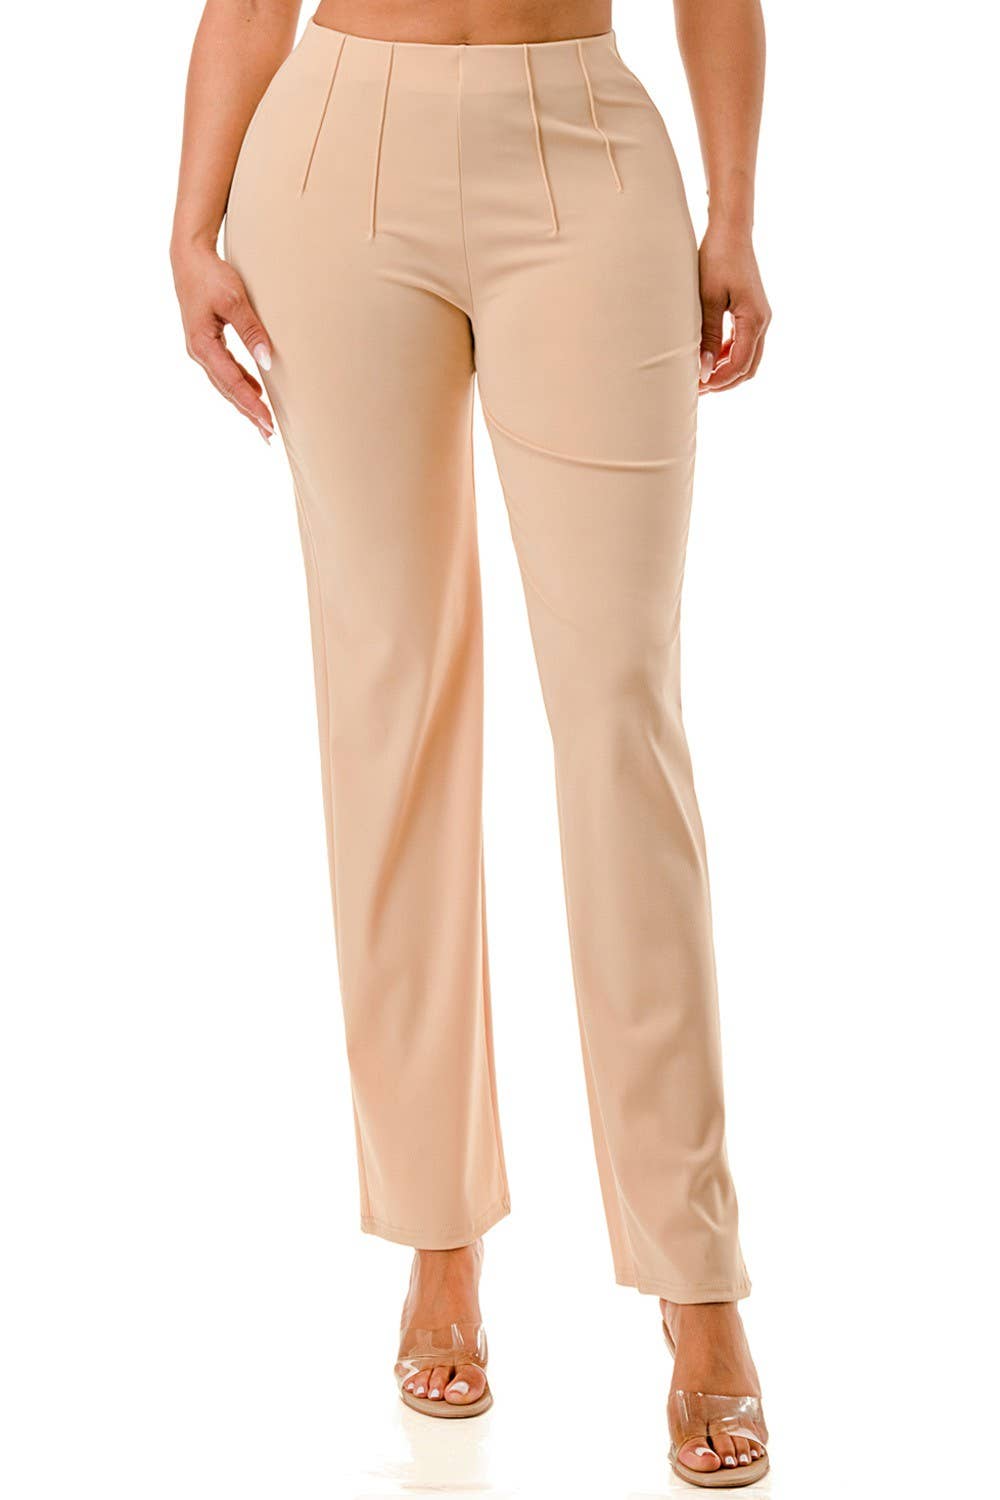 Express Dress Pants Cream Cotton Tailored Dress Pants Size 34x30 Mean Pants  | eBay